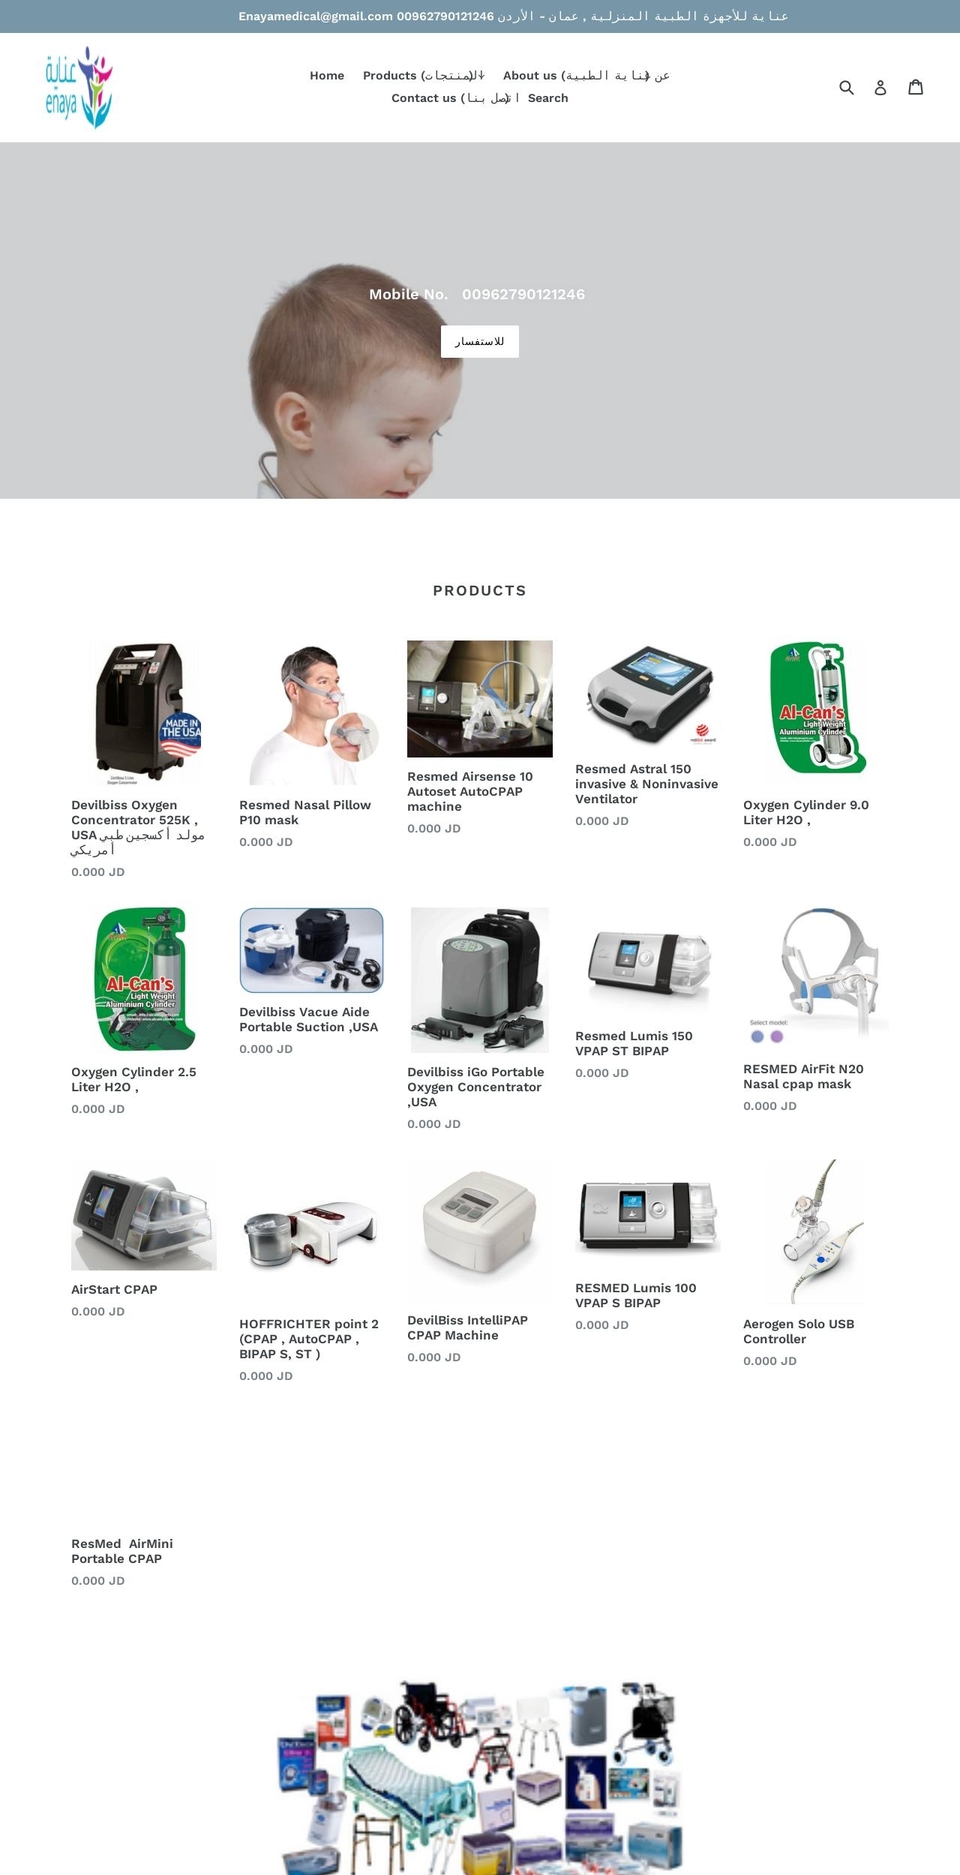 enayamedical.com shopify website screenshot